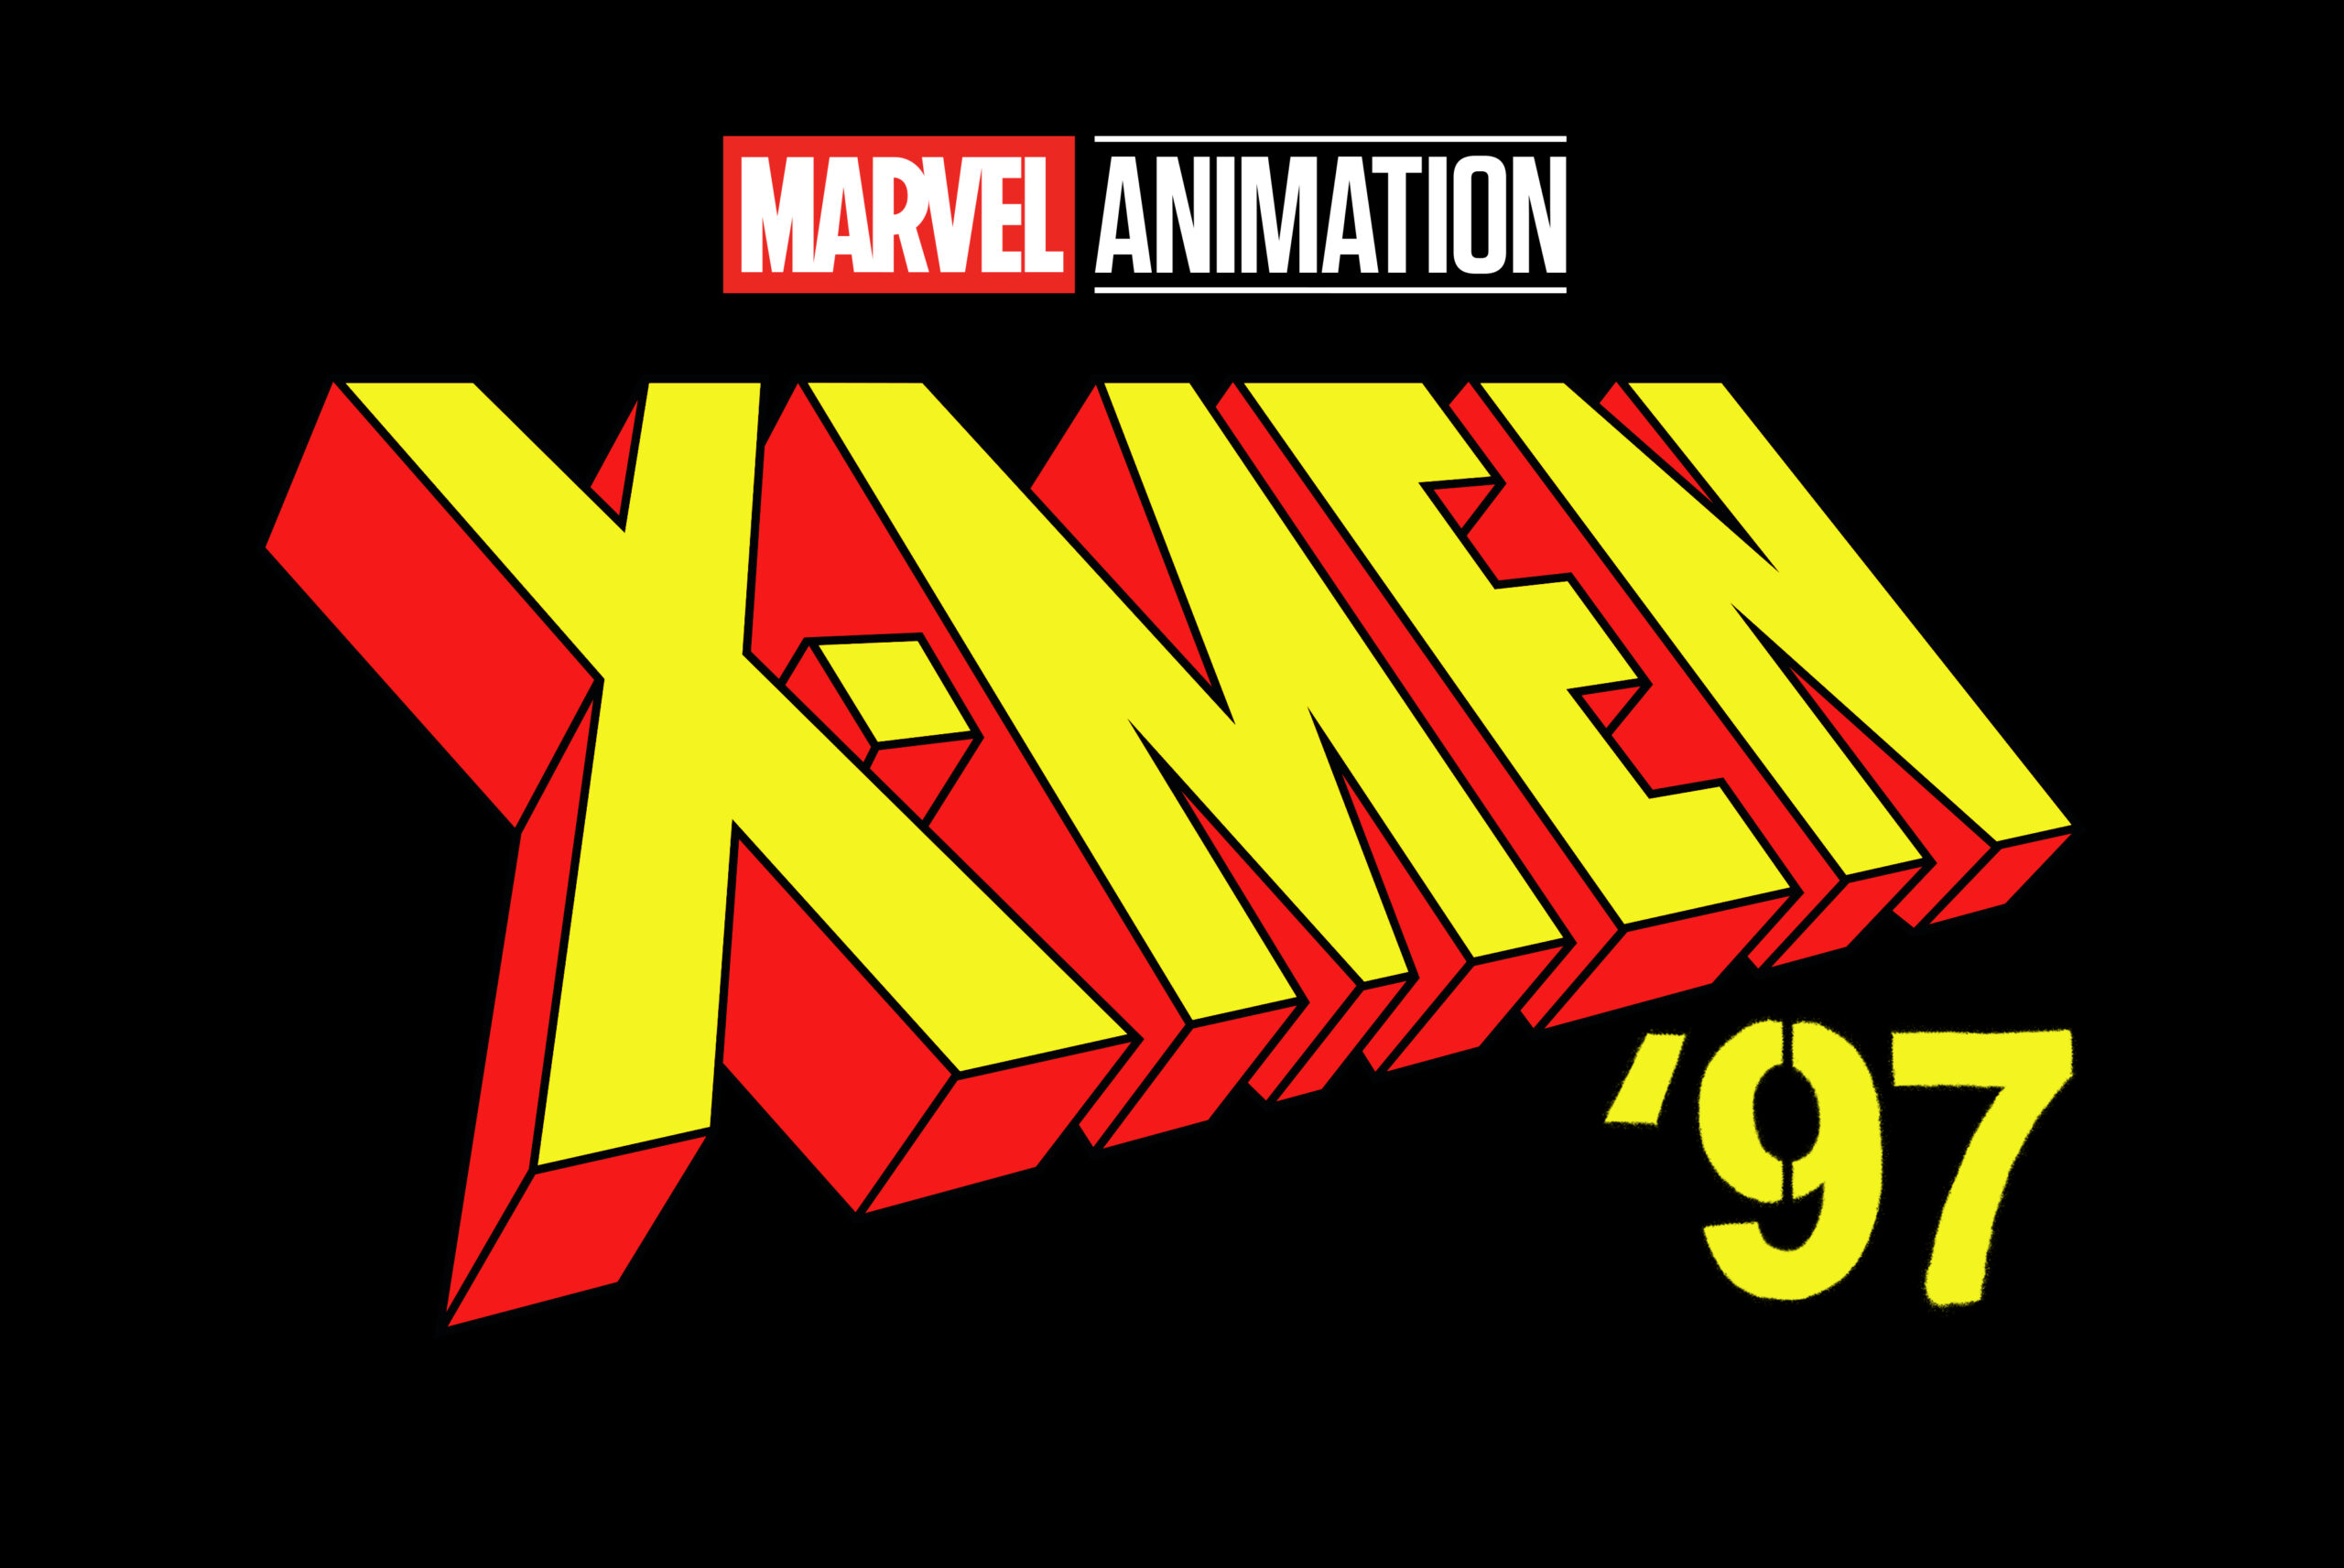 Marvel Animation's X-MEN '97 logo.